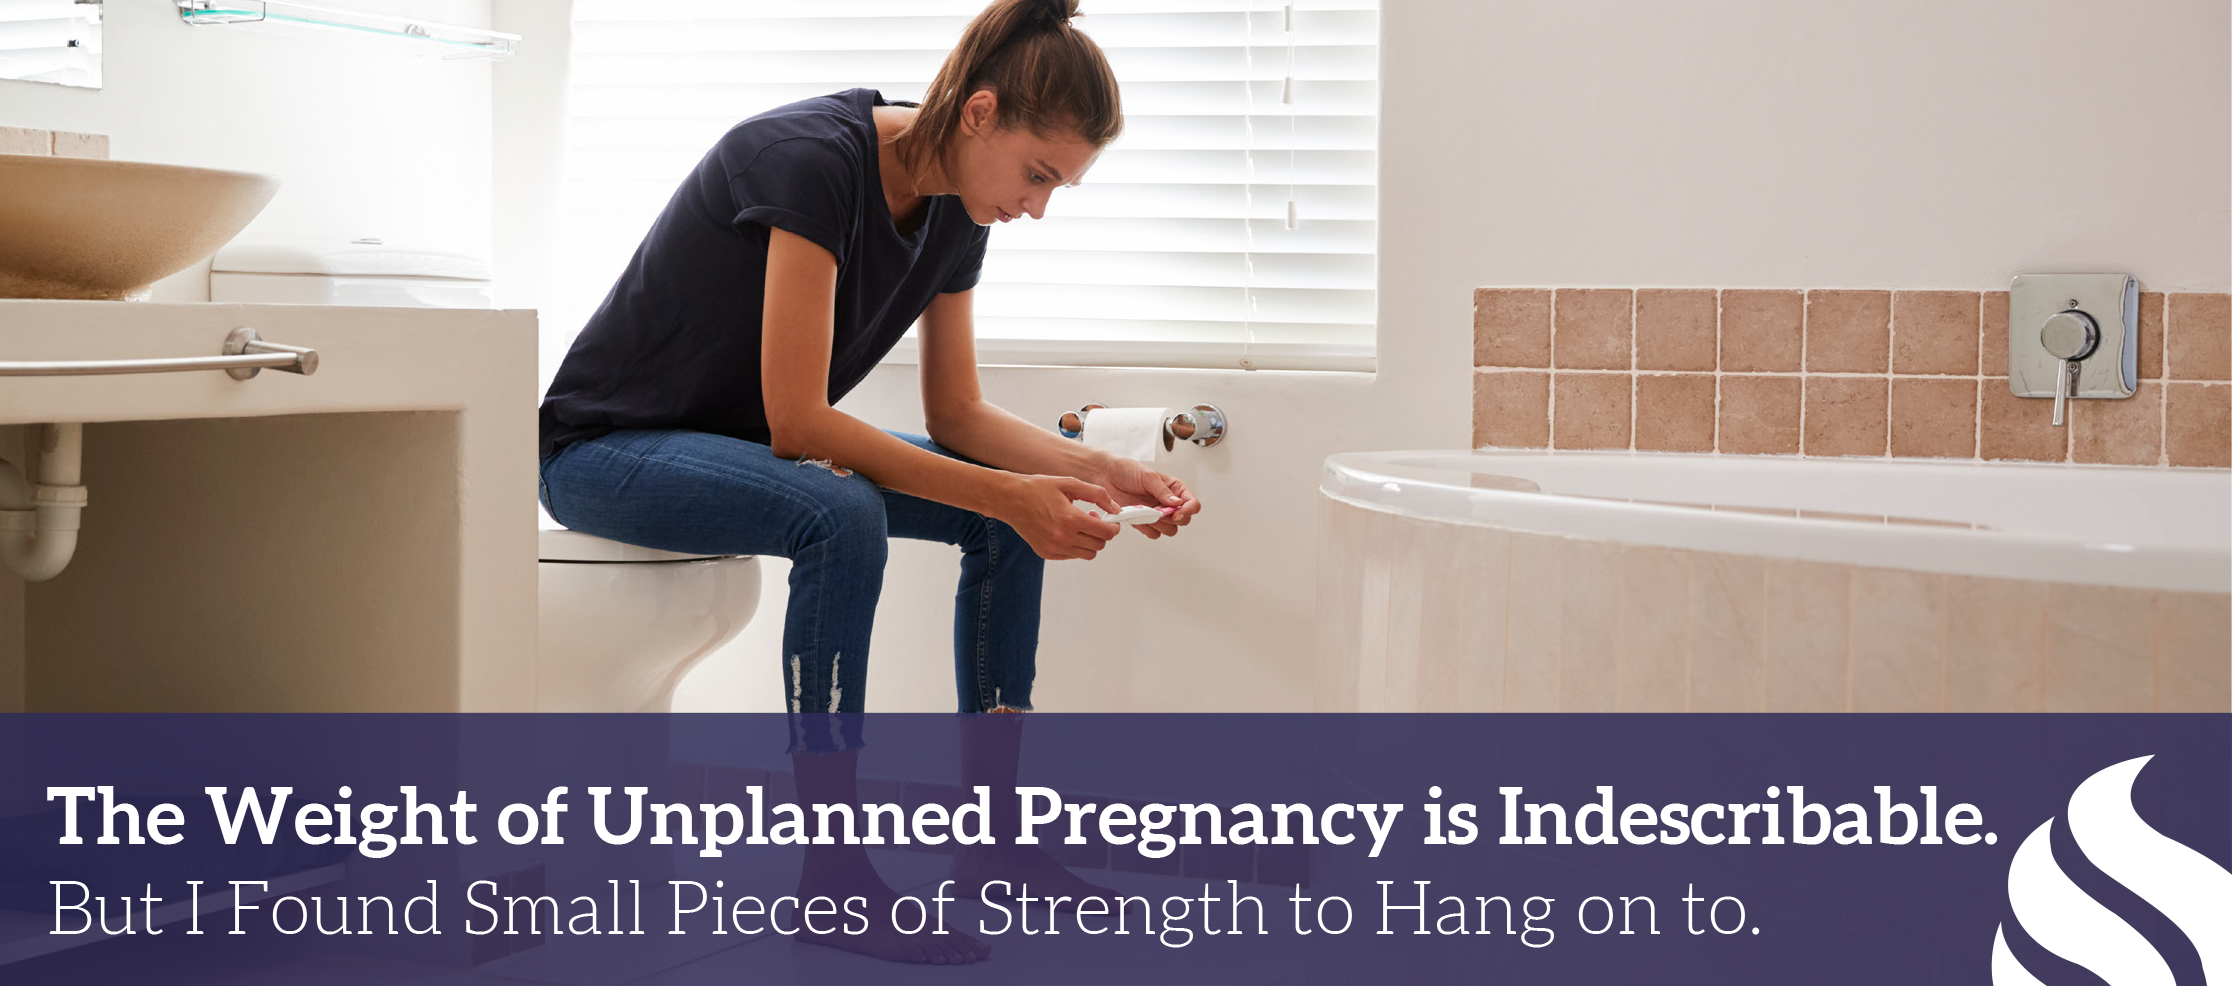 Woman sitting in bathroom looking at pregnancy test